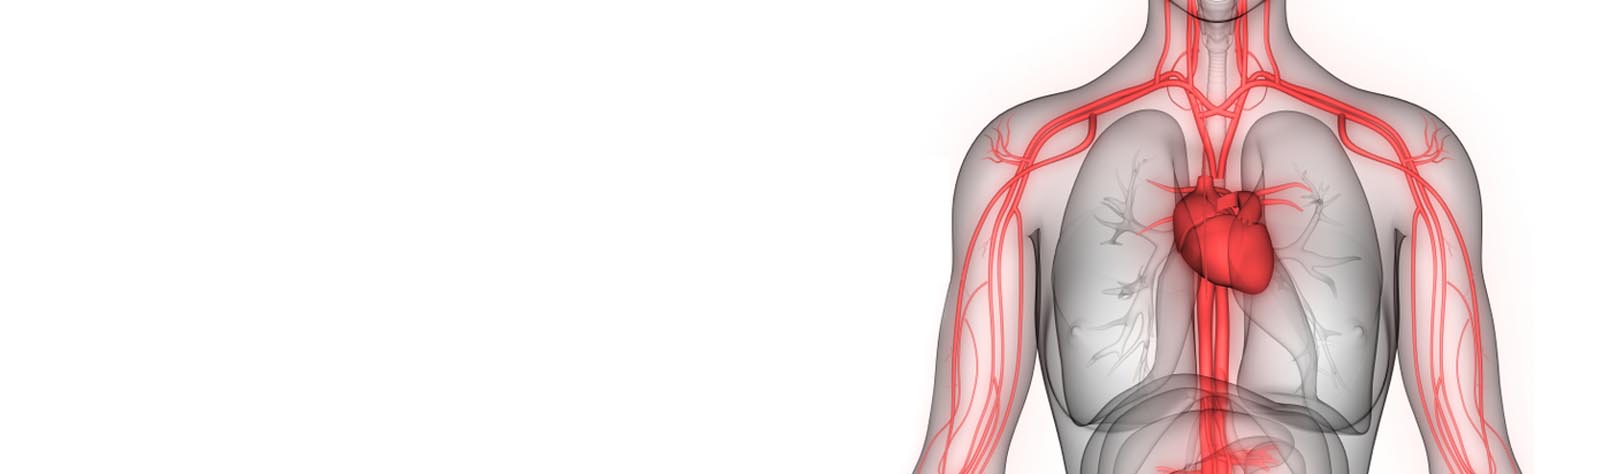 Circulatory Cardio-vascular System